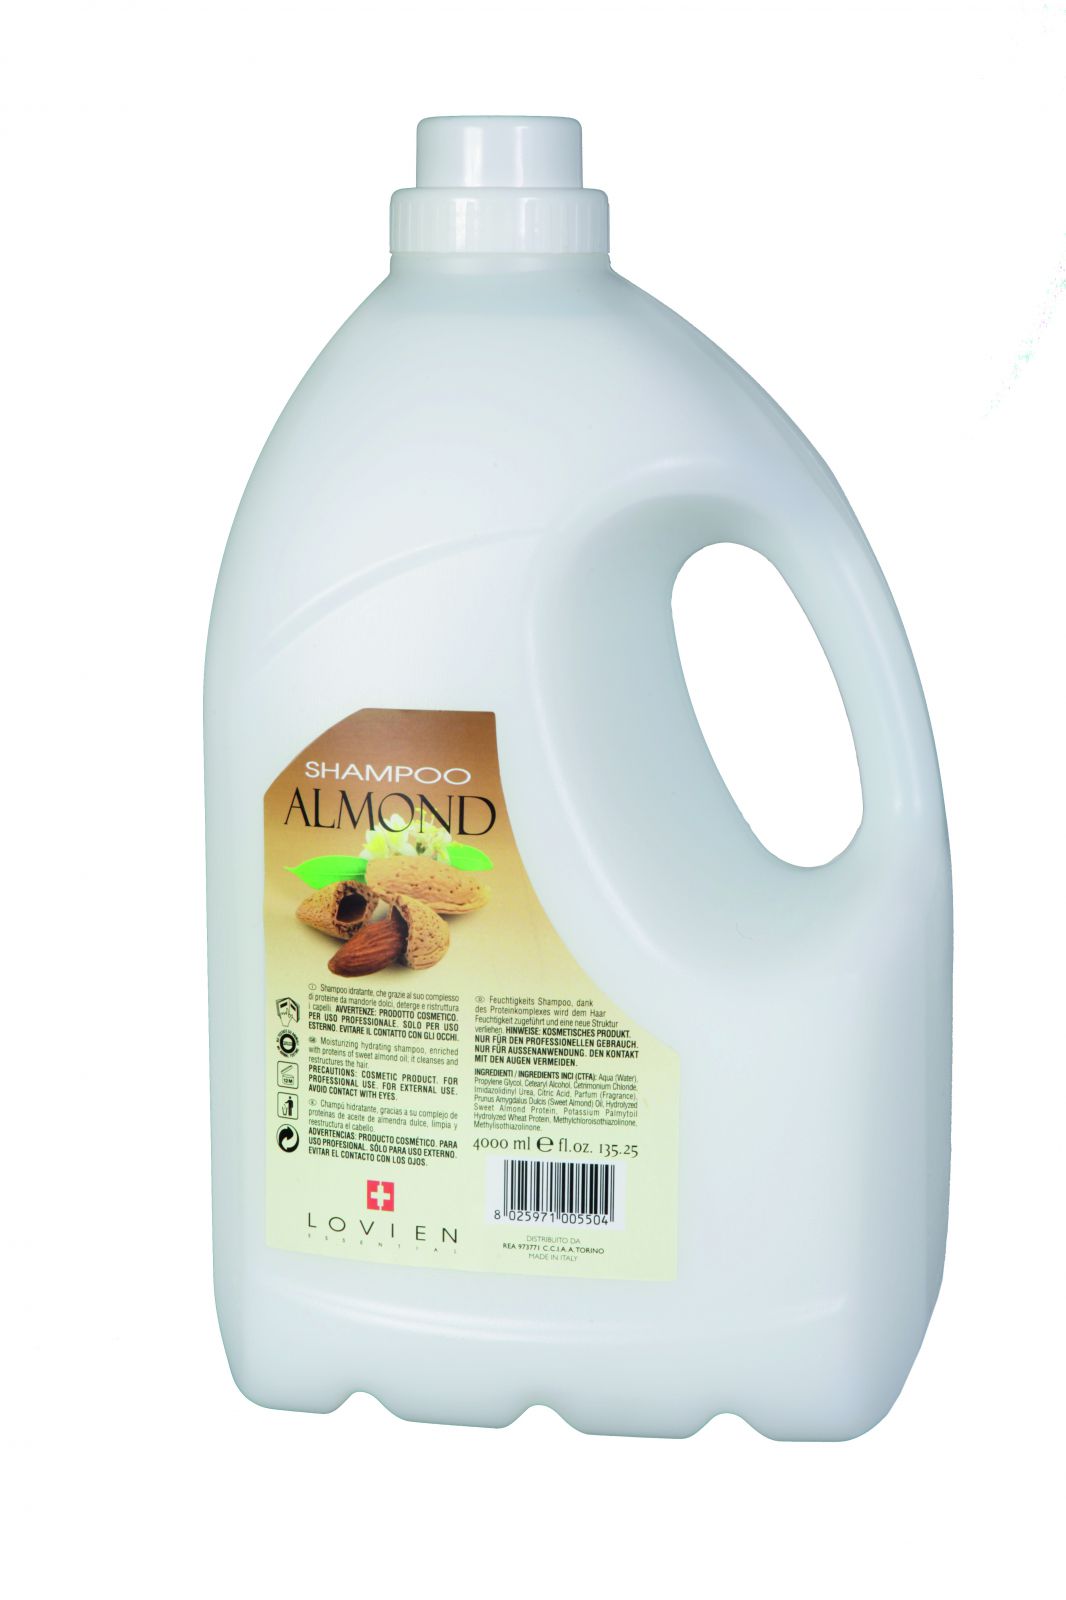 Lovien Shampoo Almond 4000ml vlasový šampon - Hedvábný šampon s extratem z mandle (bez pumpy).